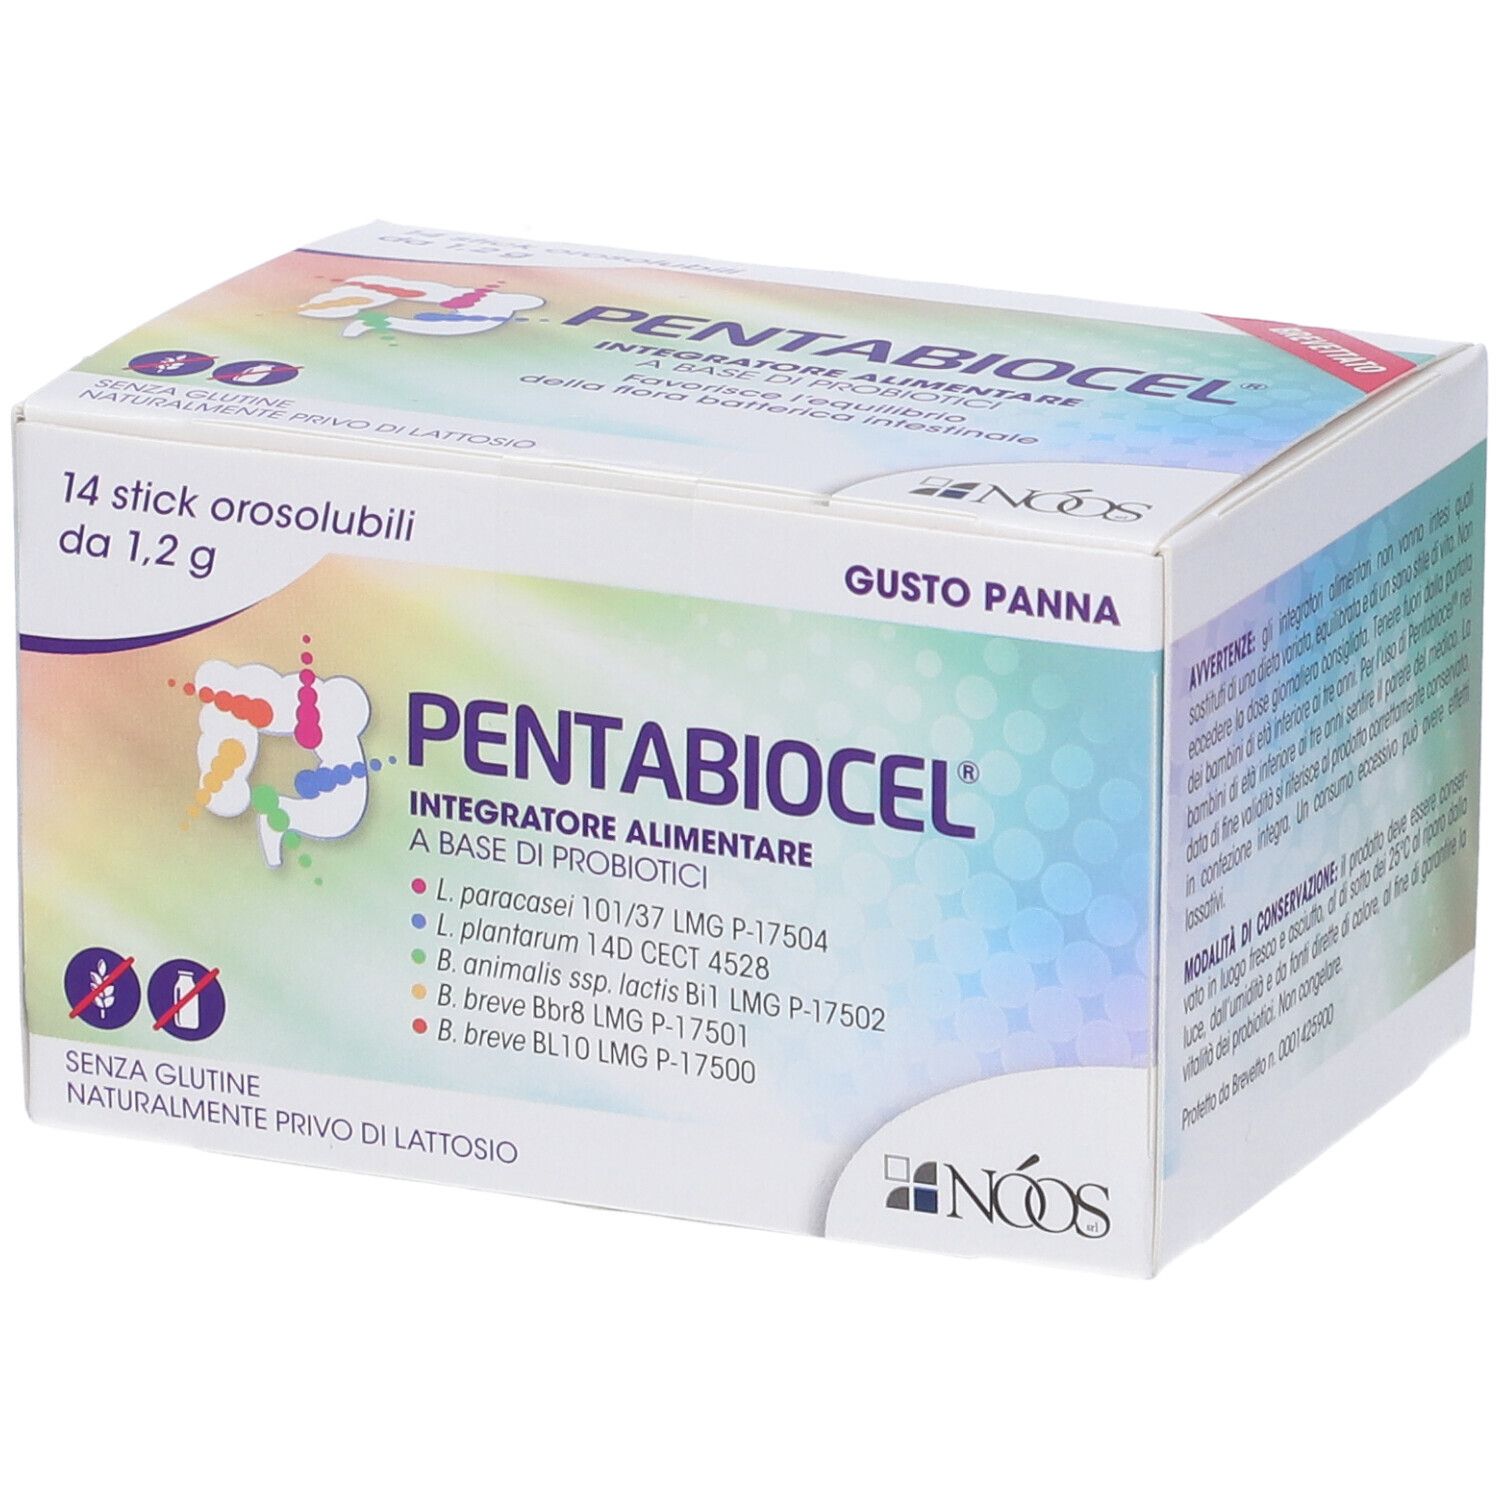 Pentabiocel® 14 Stick Orosolubili